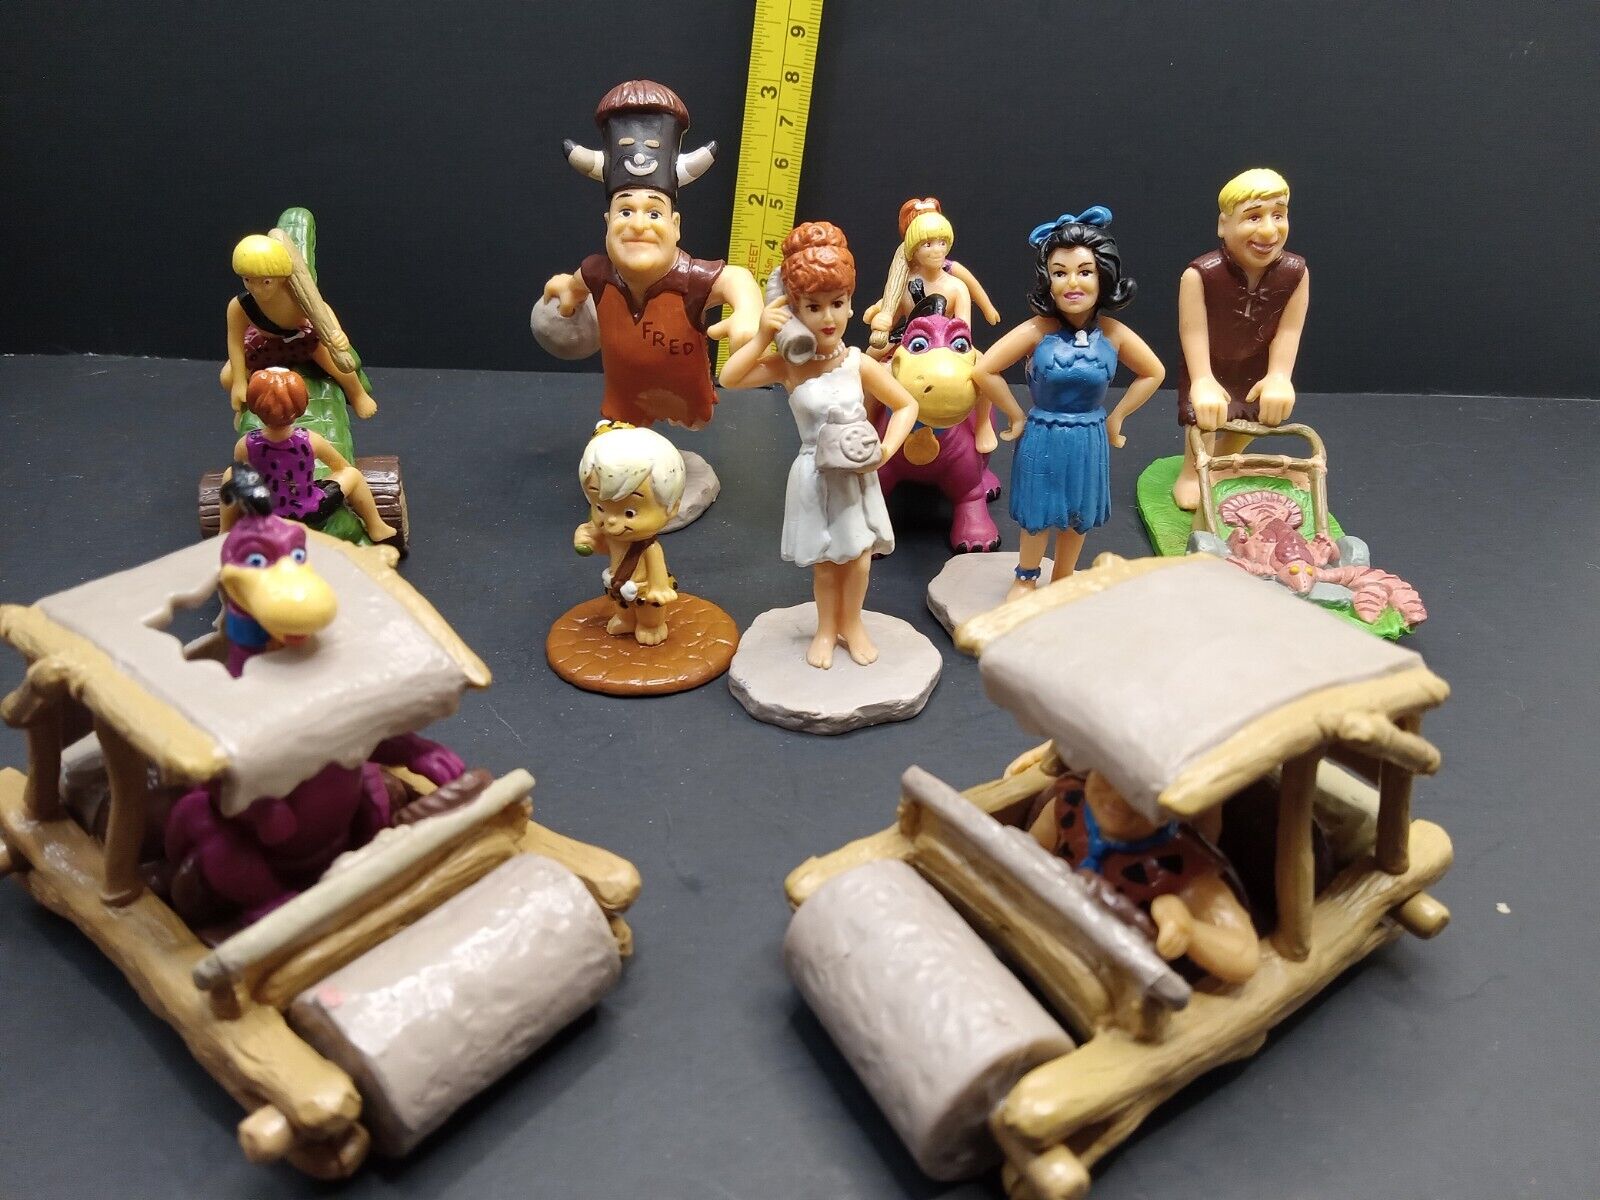 Vintage The Flintstones Dakin cake toppers 9 different Figures in action PIC